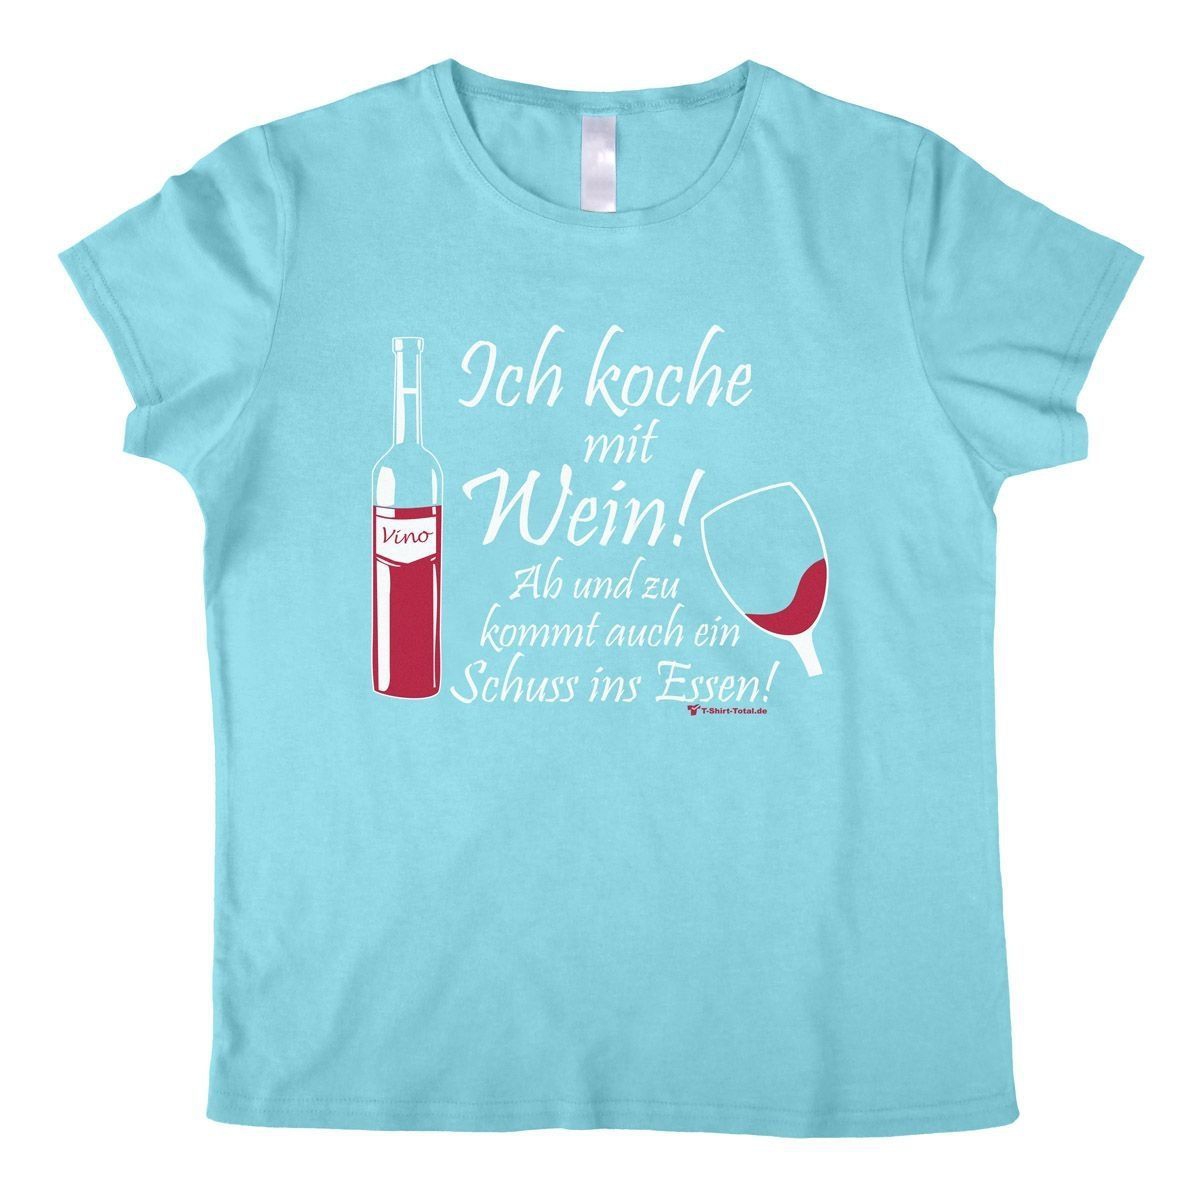 Koche mit Wein Woman T-Shirt hellblau Large